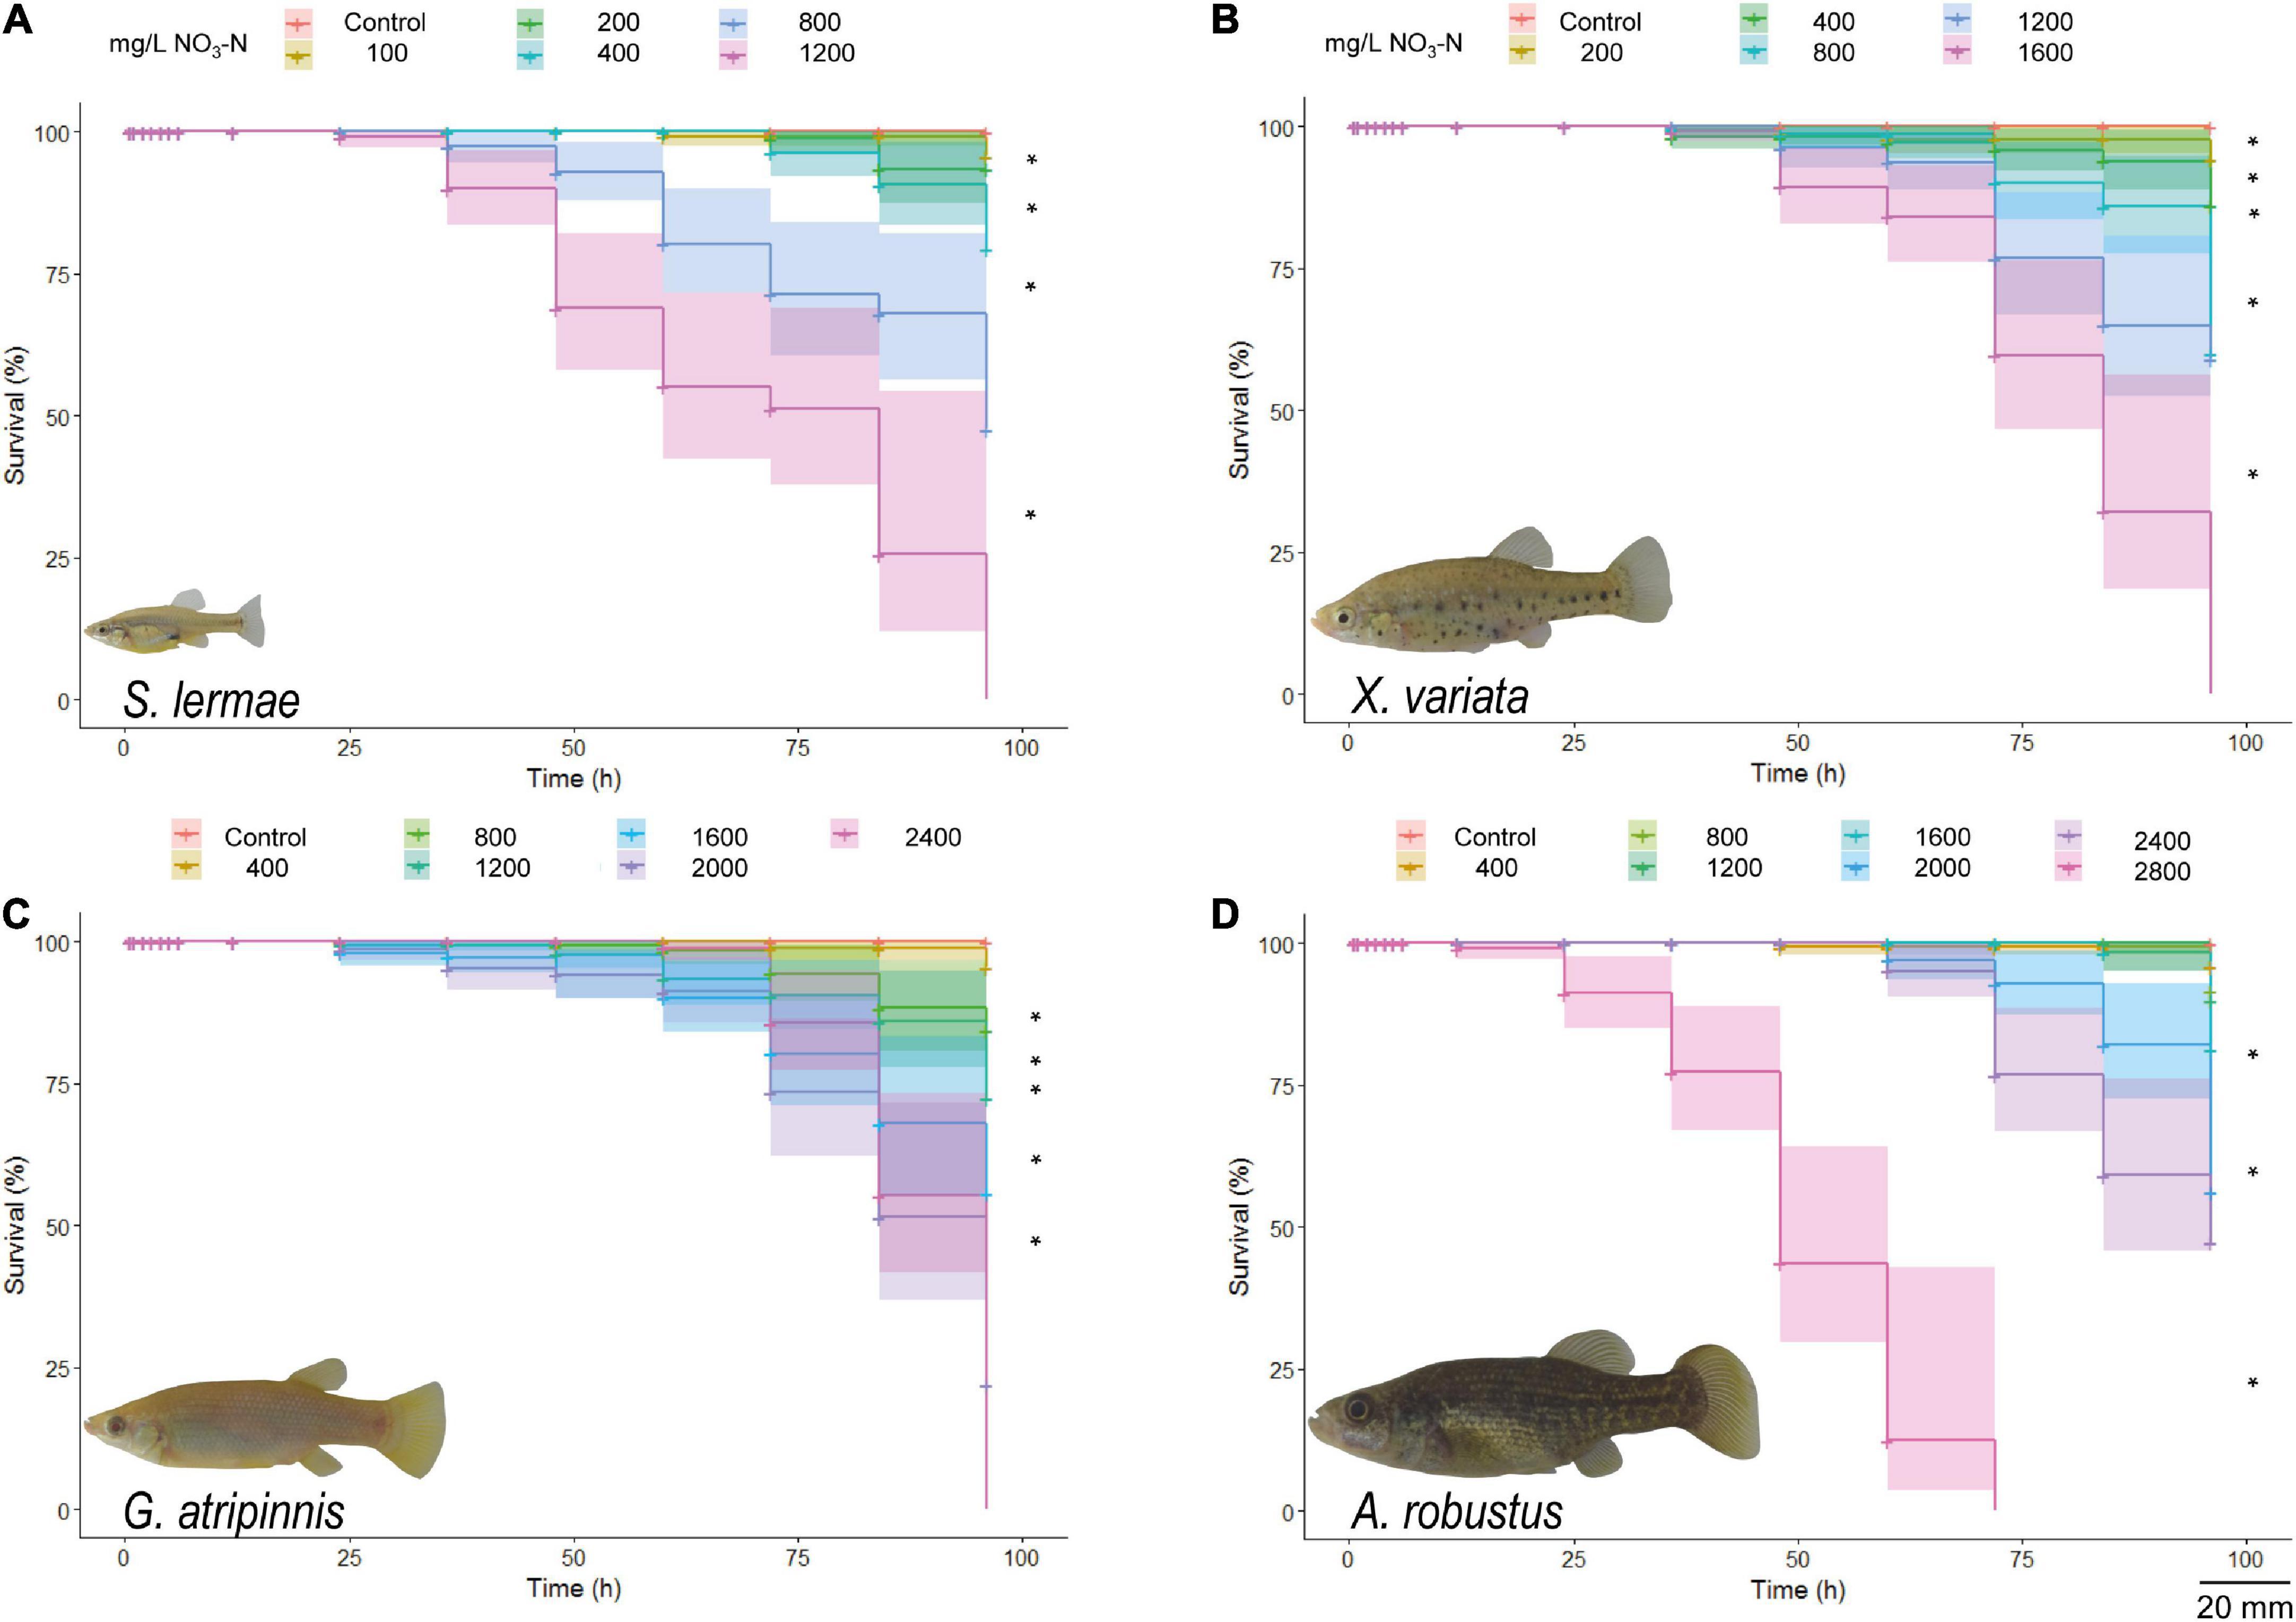 Ecology, Evolution, and Behavior of Viviparous Fishes